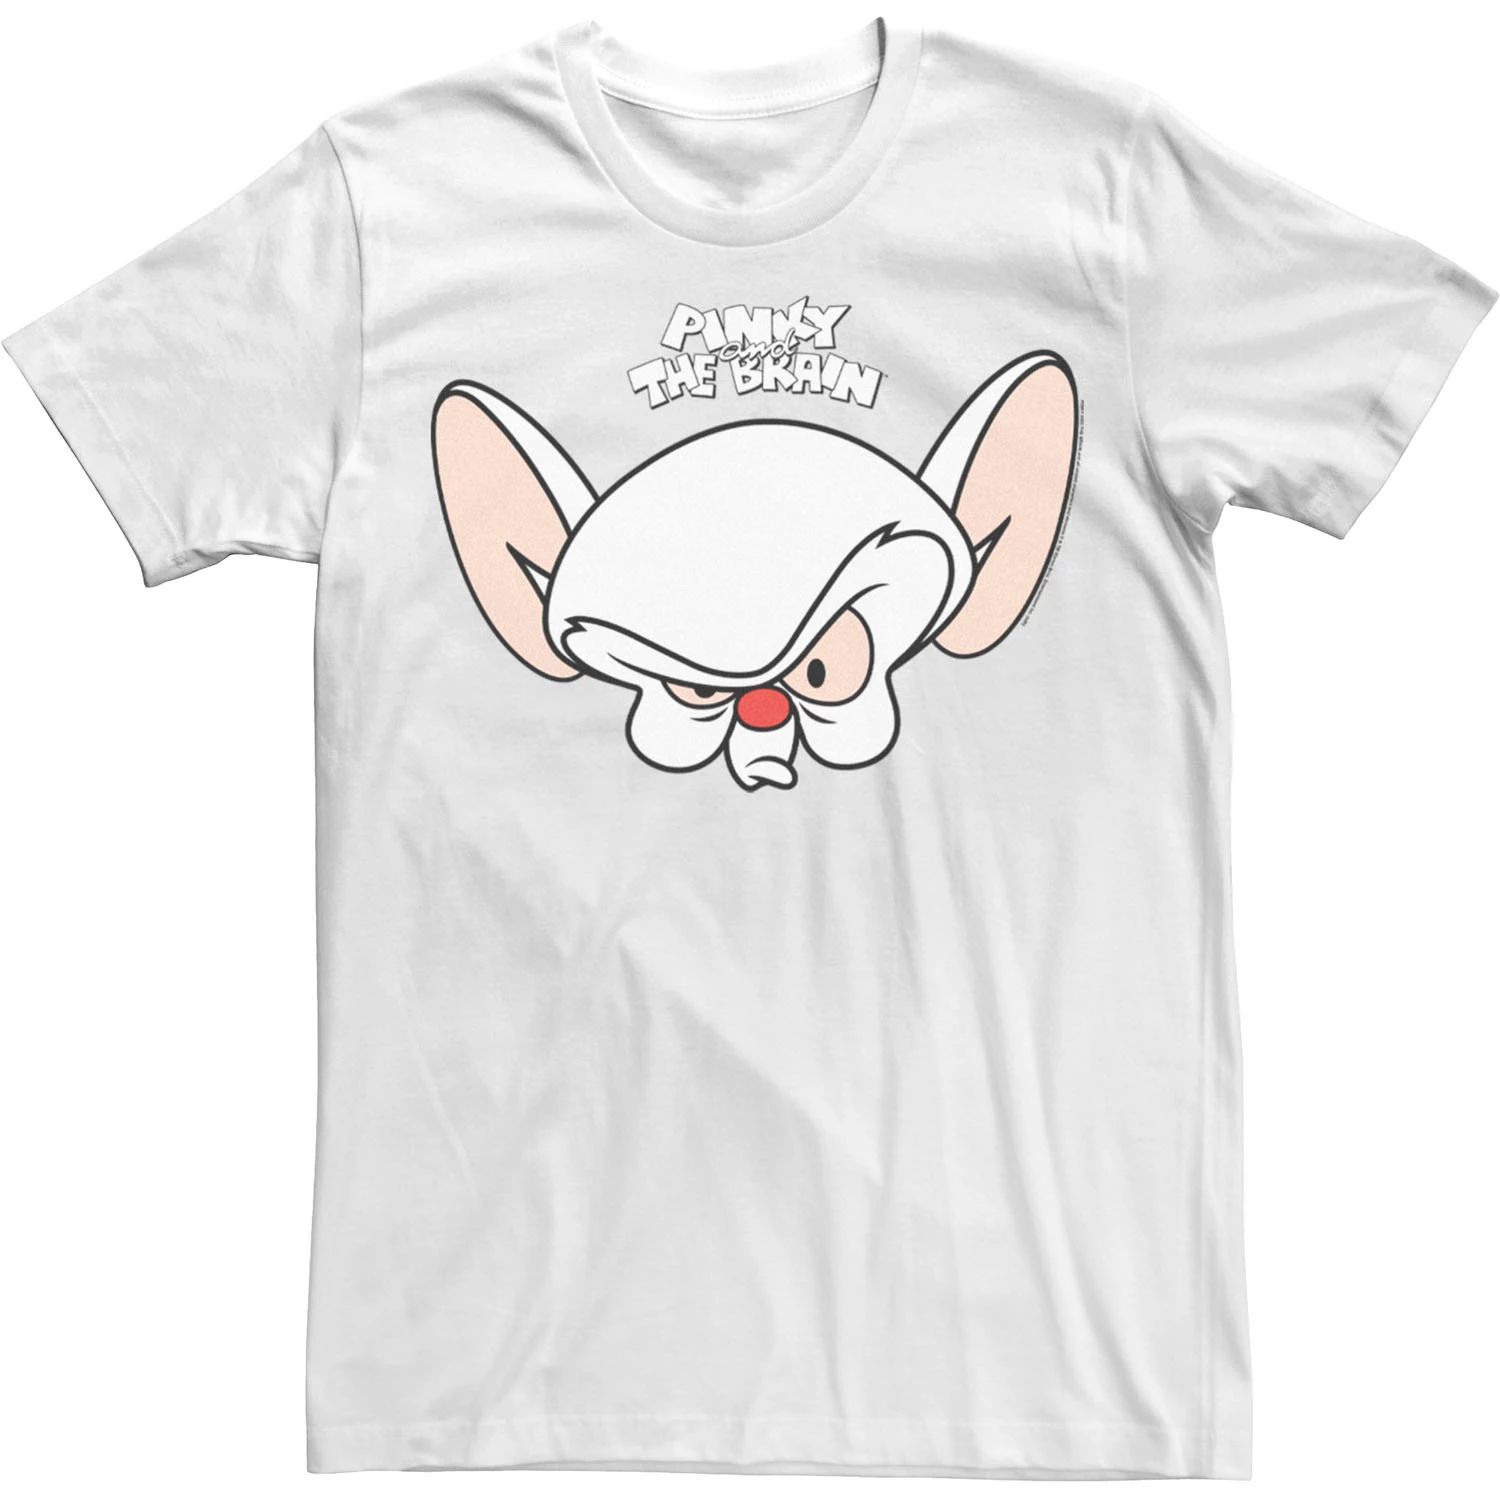 Мужская футболка Pinky And The Brain с большим лицом Licensed Character